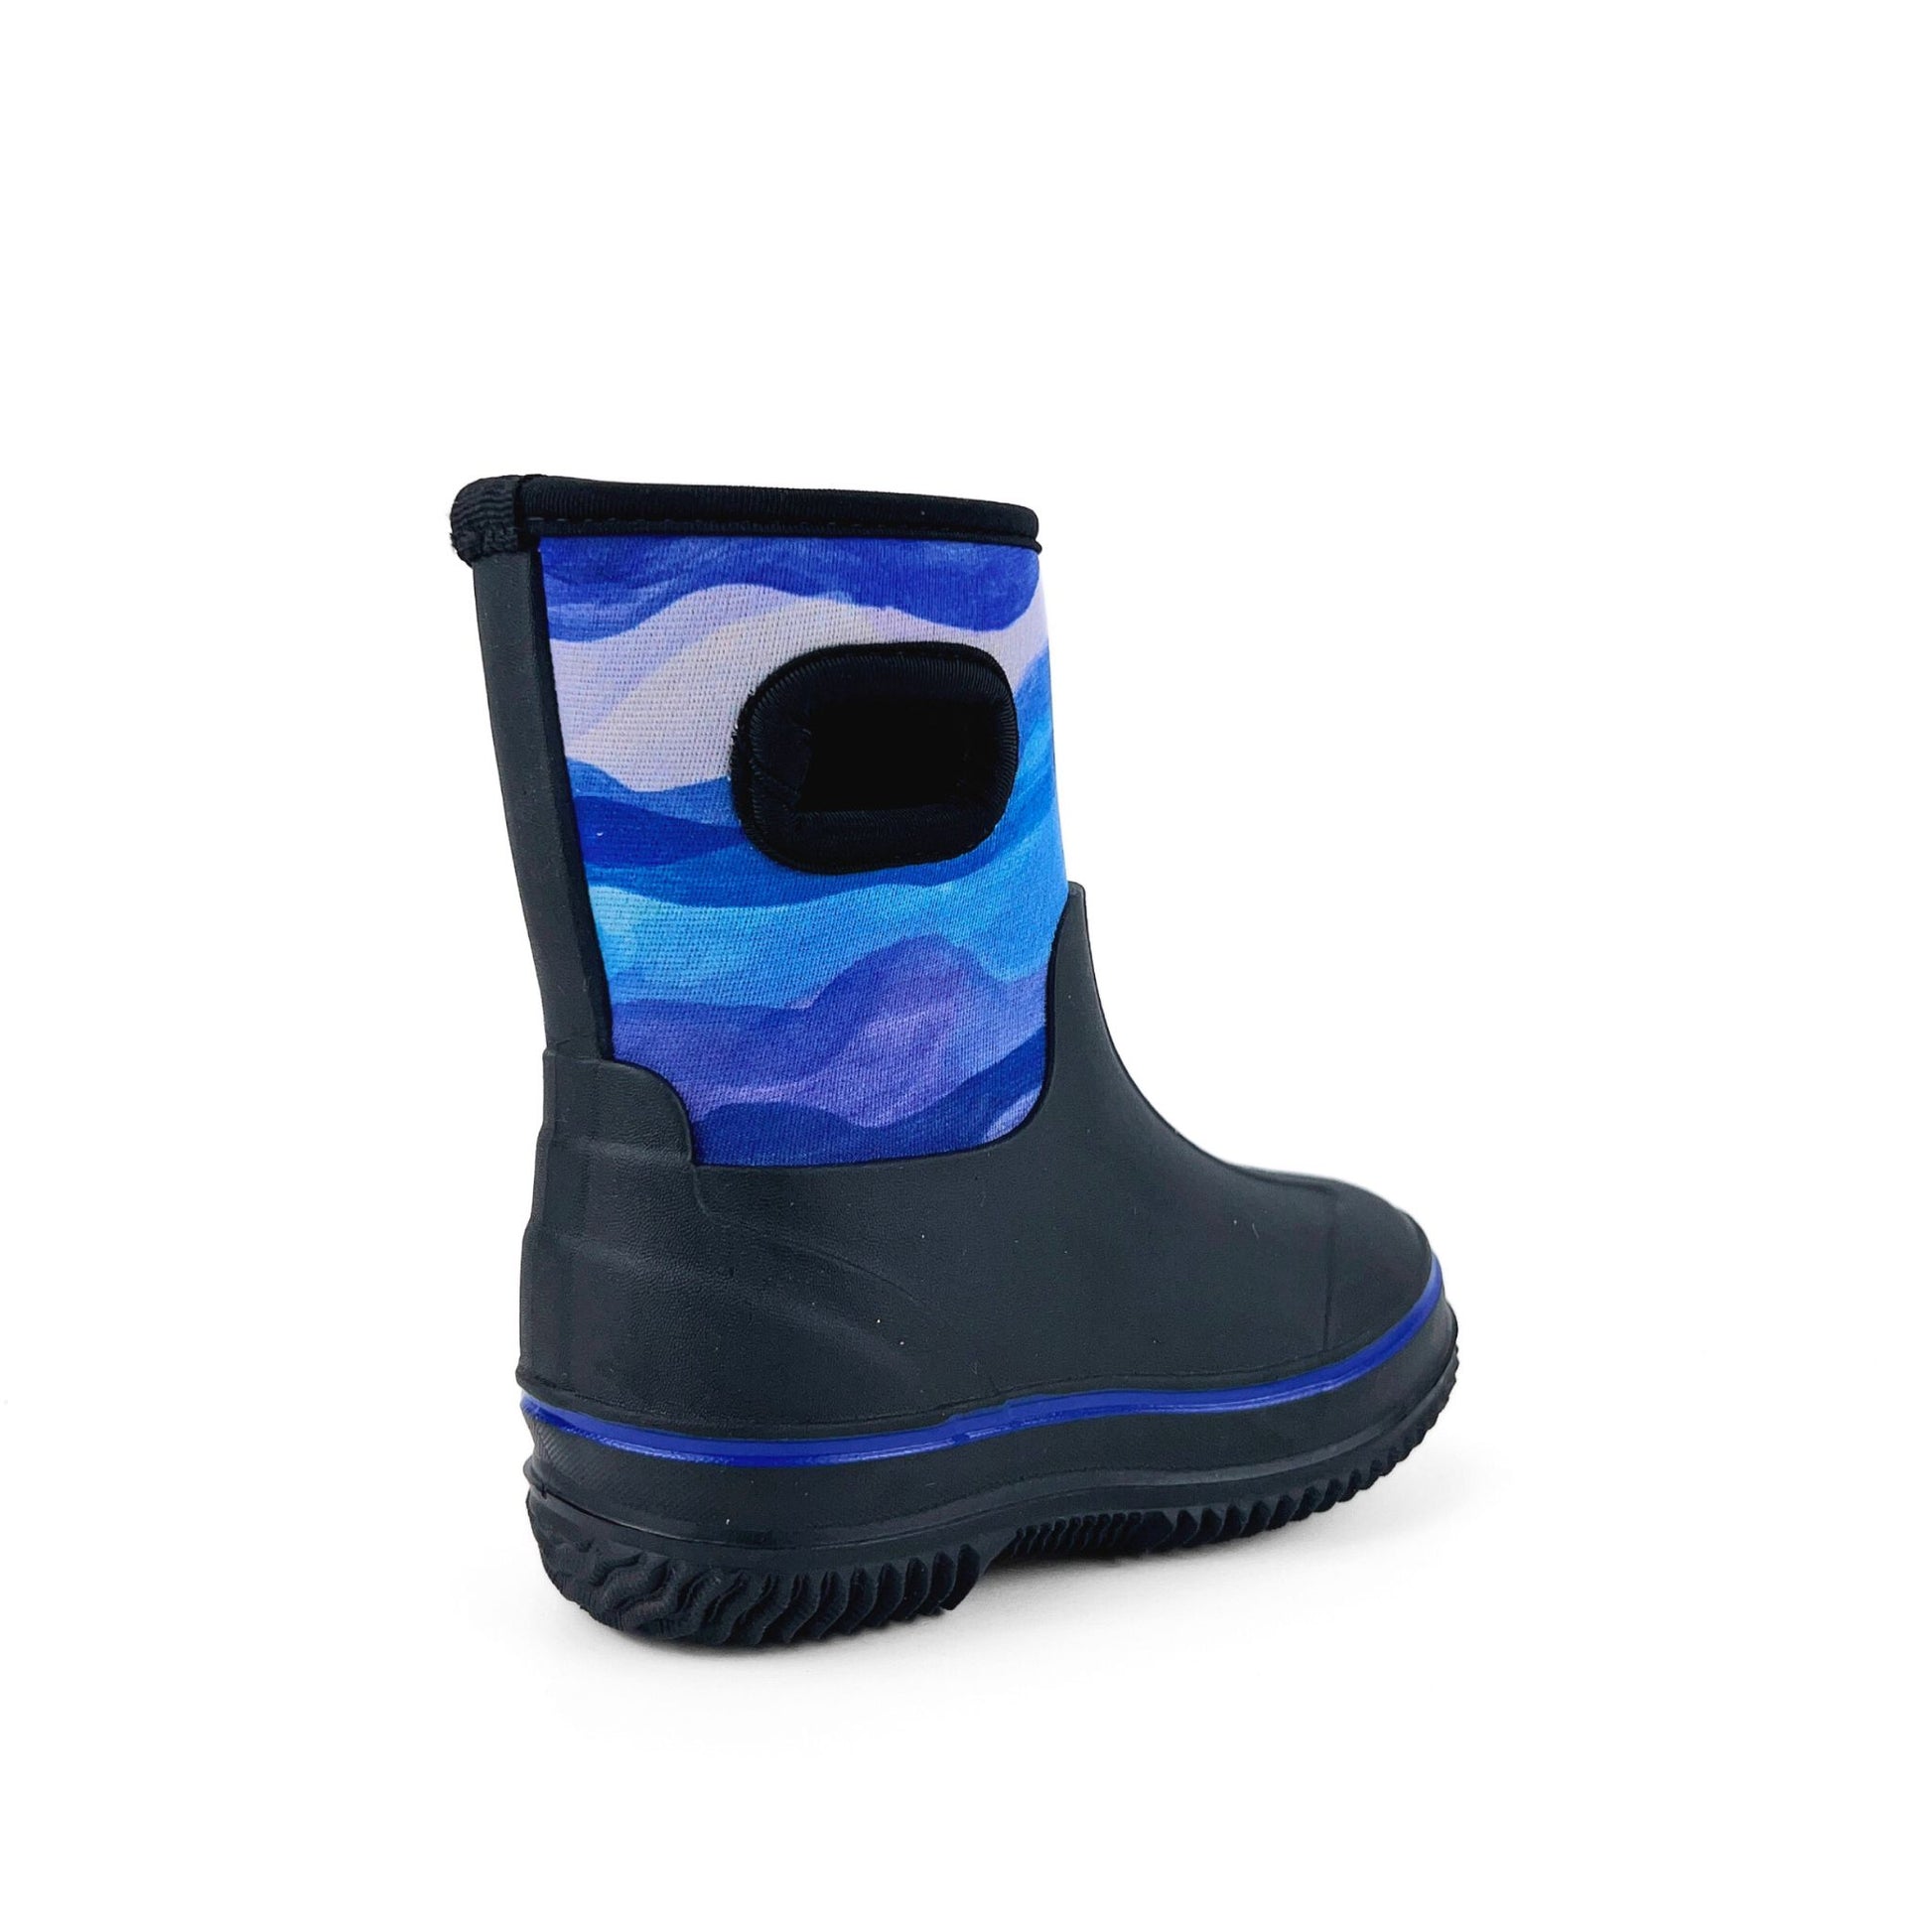 Gumboot Rain boot made of neoprene with blue wave design. Waterproof rain boot